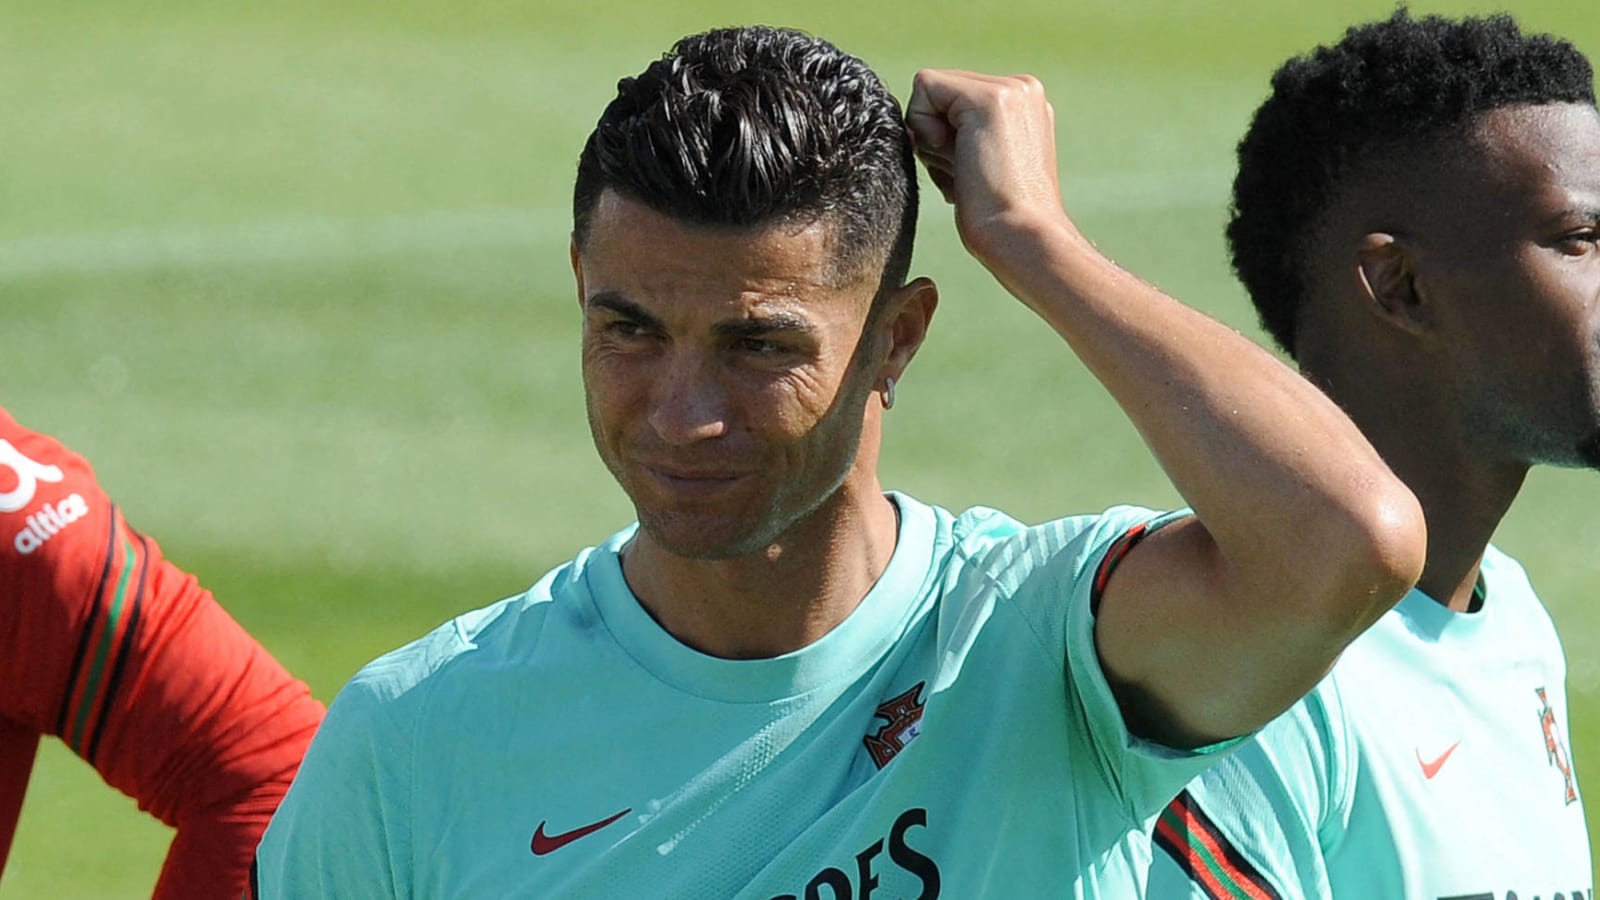 Cristiano Ronaldo to wear No. 7 for Manchester United return